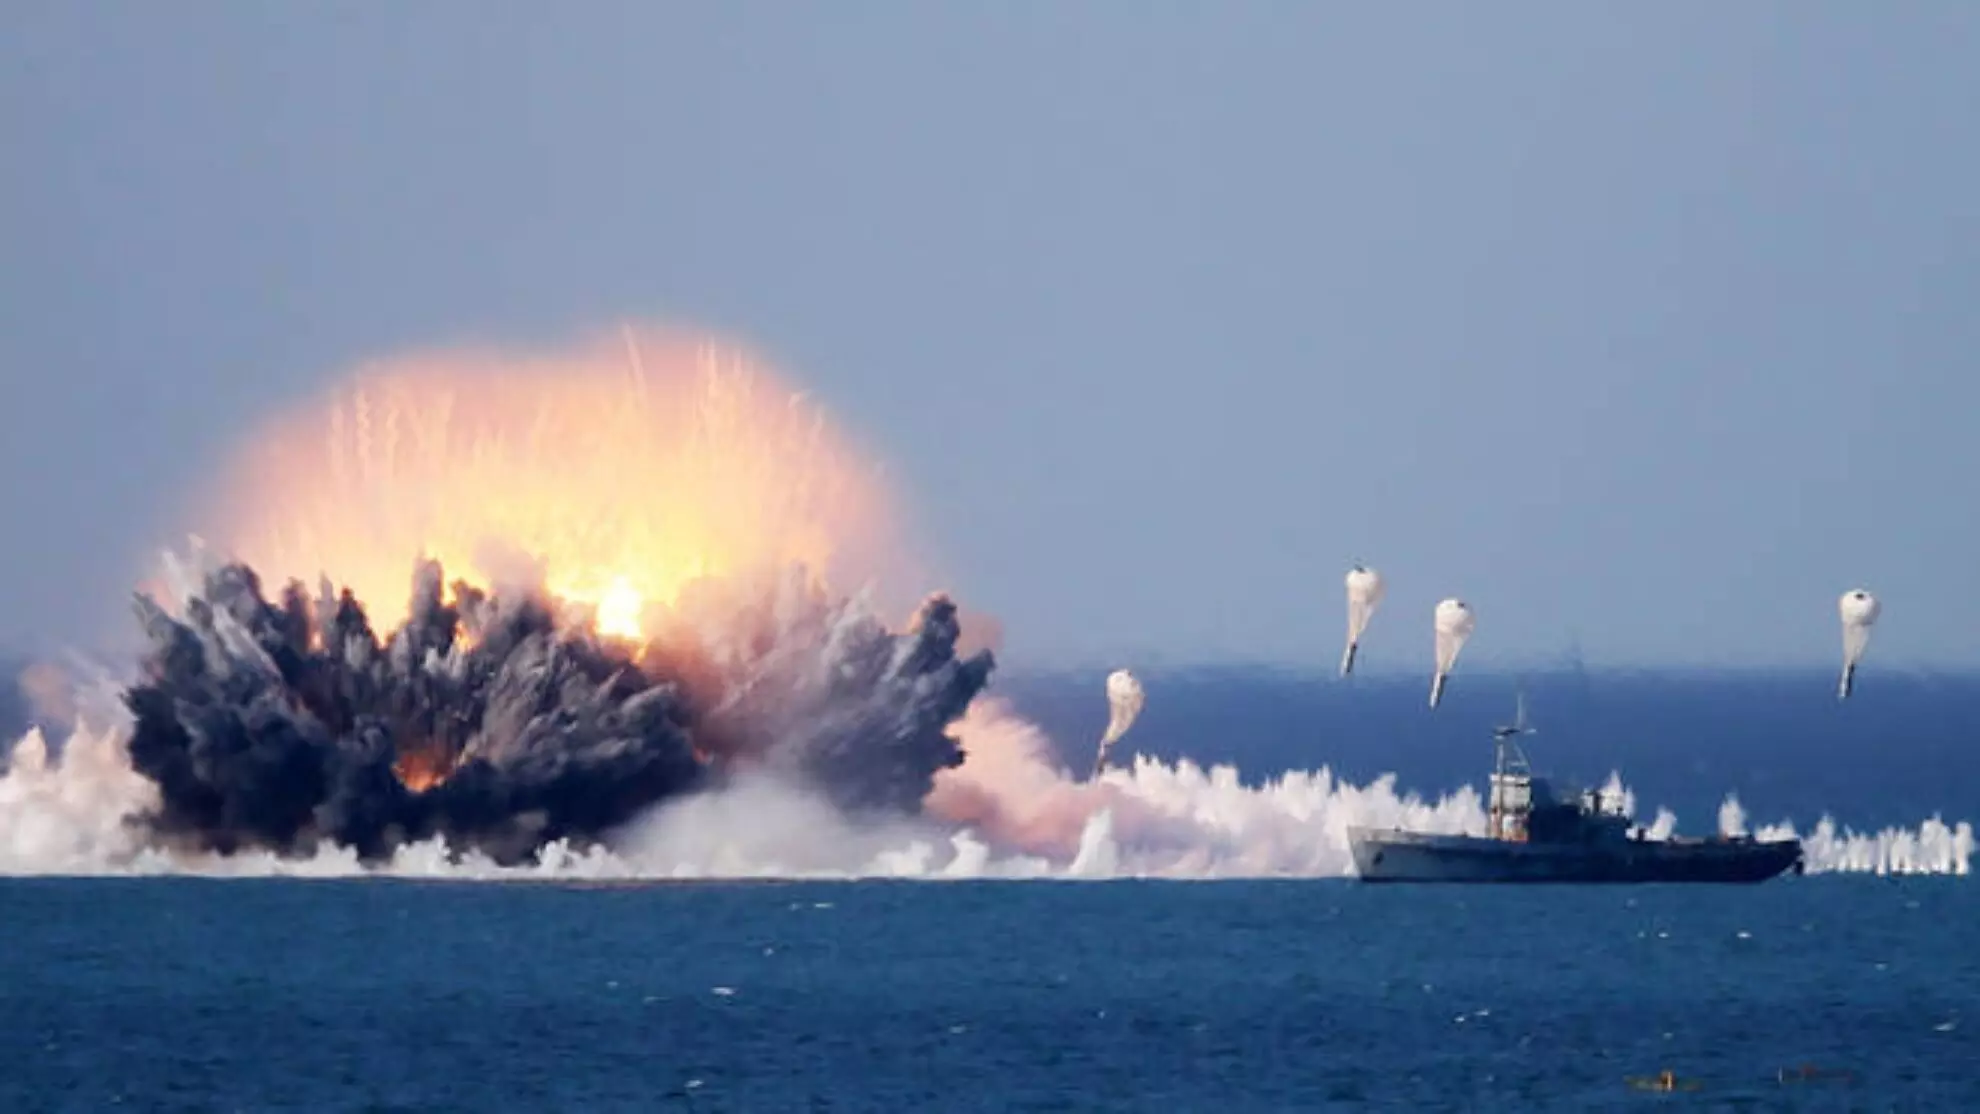 Russia admitted to using vacuum bombs in Ukraine: UK